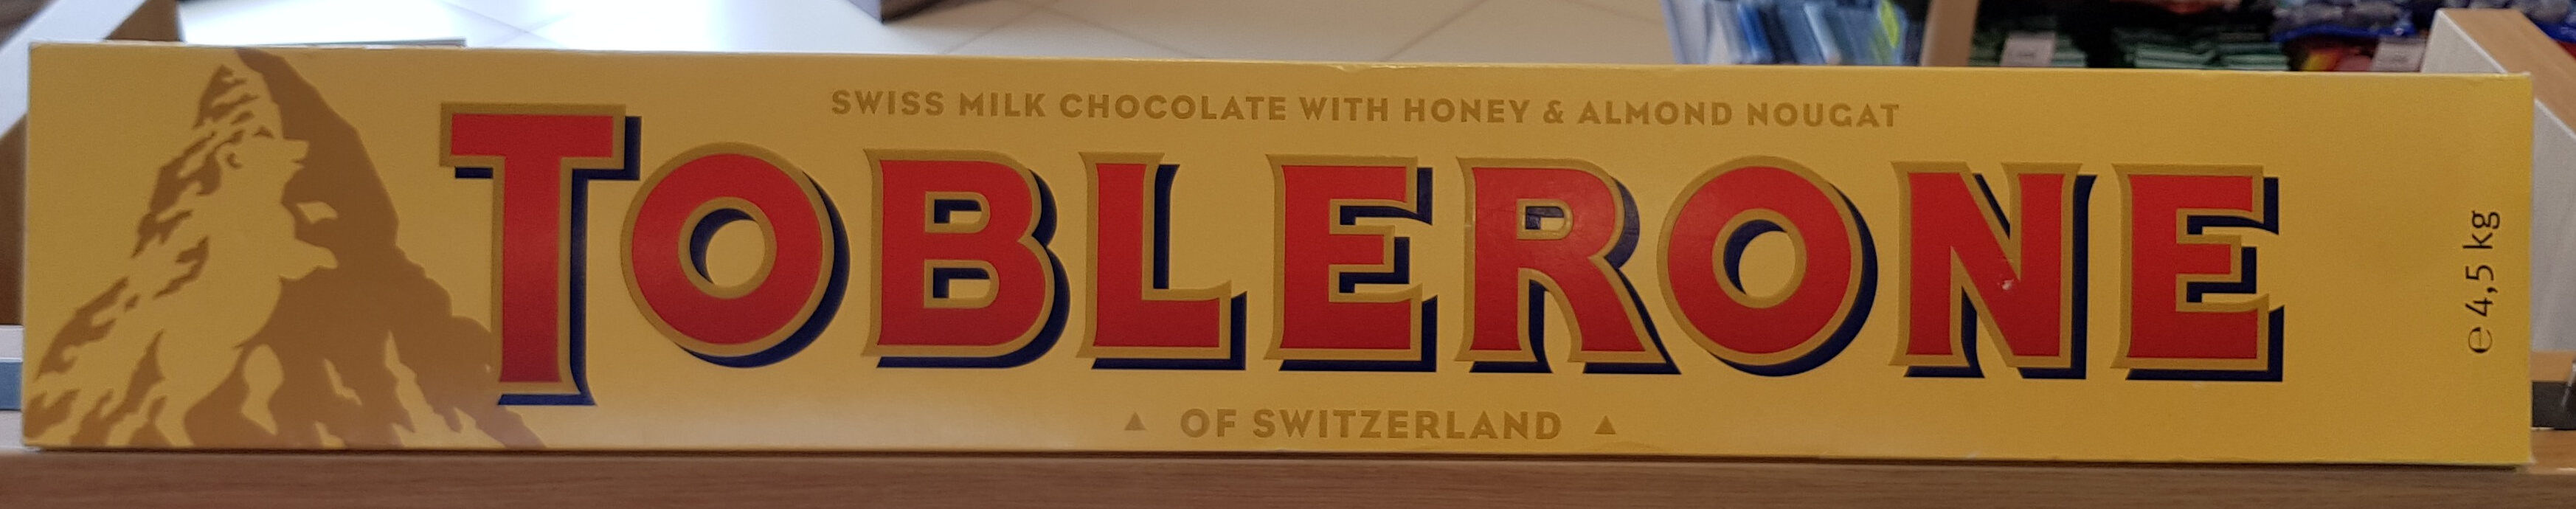 Toblerone chocolate bar milk - Product